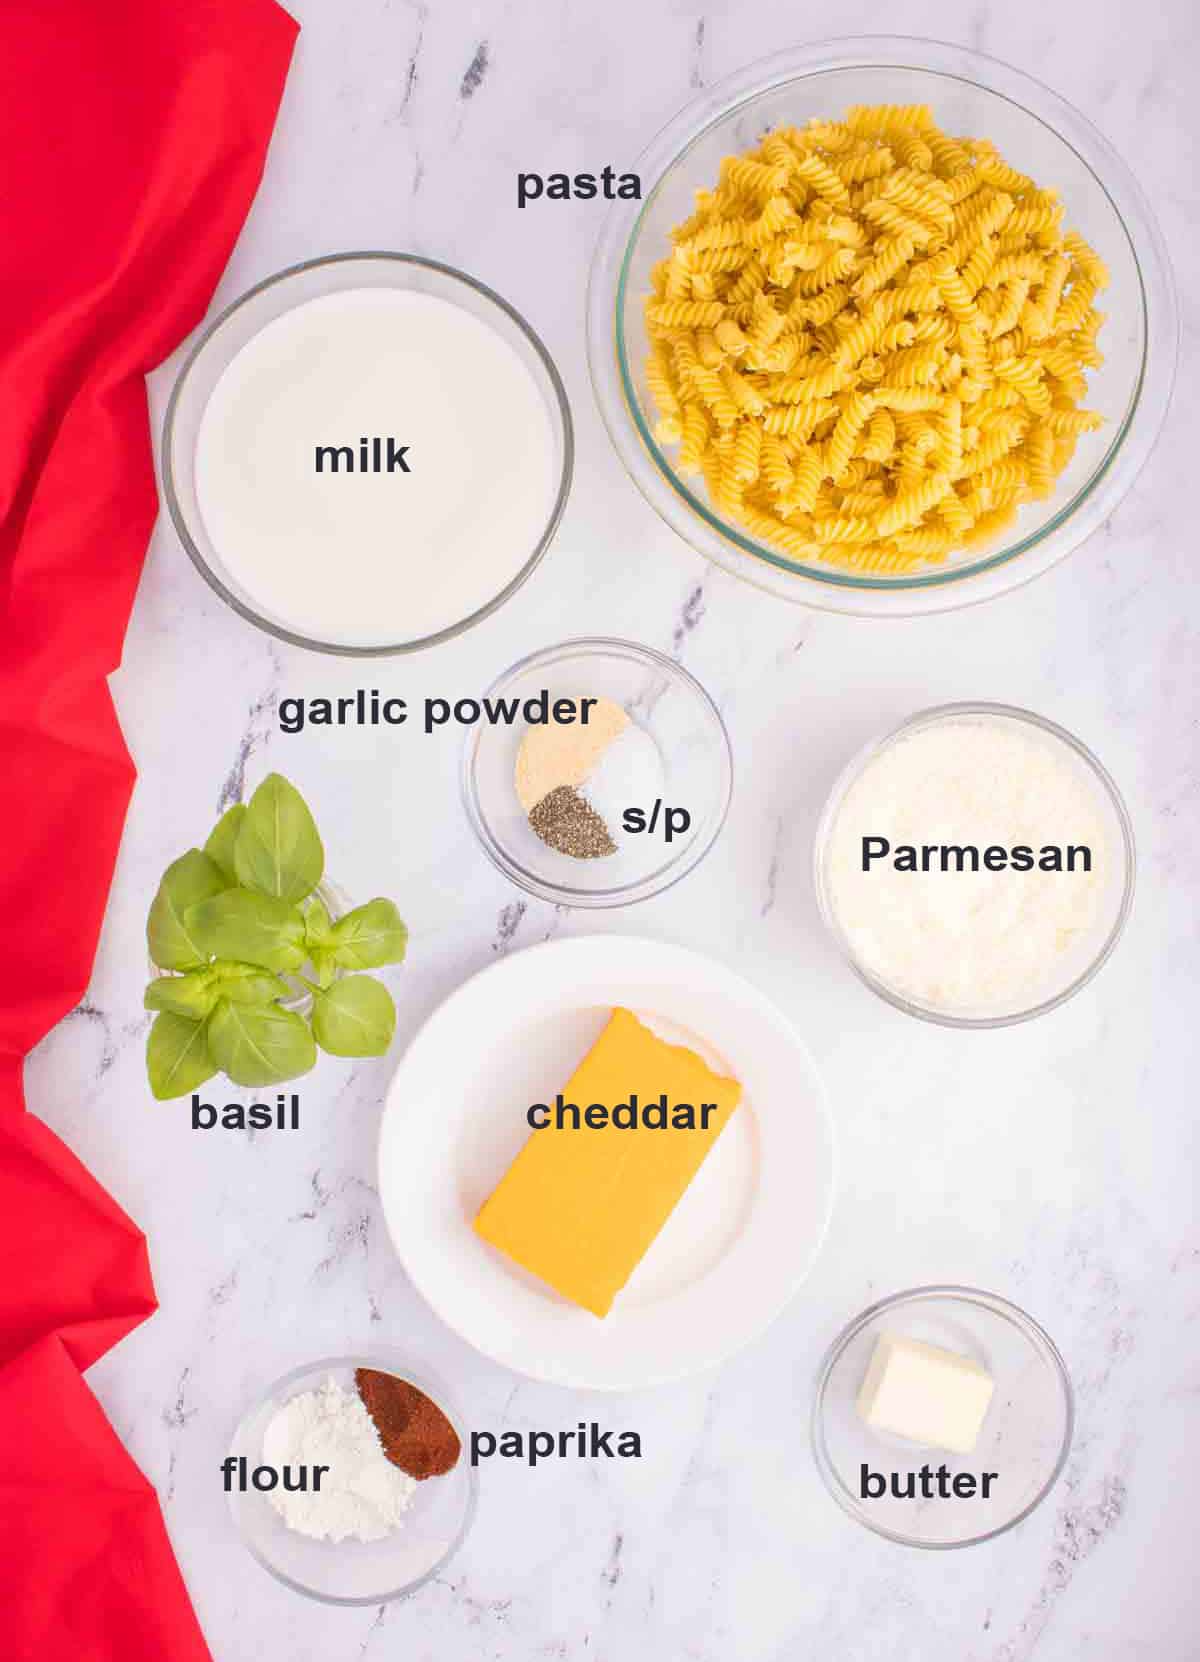 pasta, milk, Parmesan, cheddar, butter, seasonings, basil